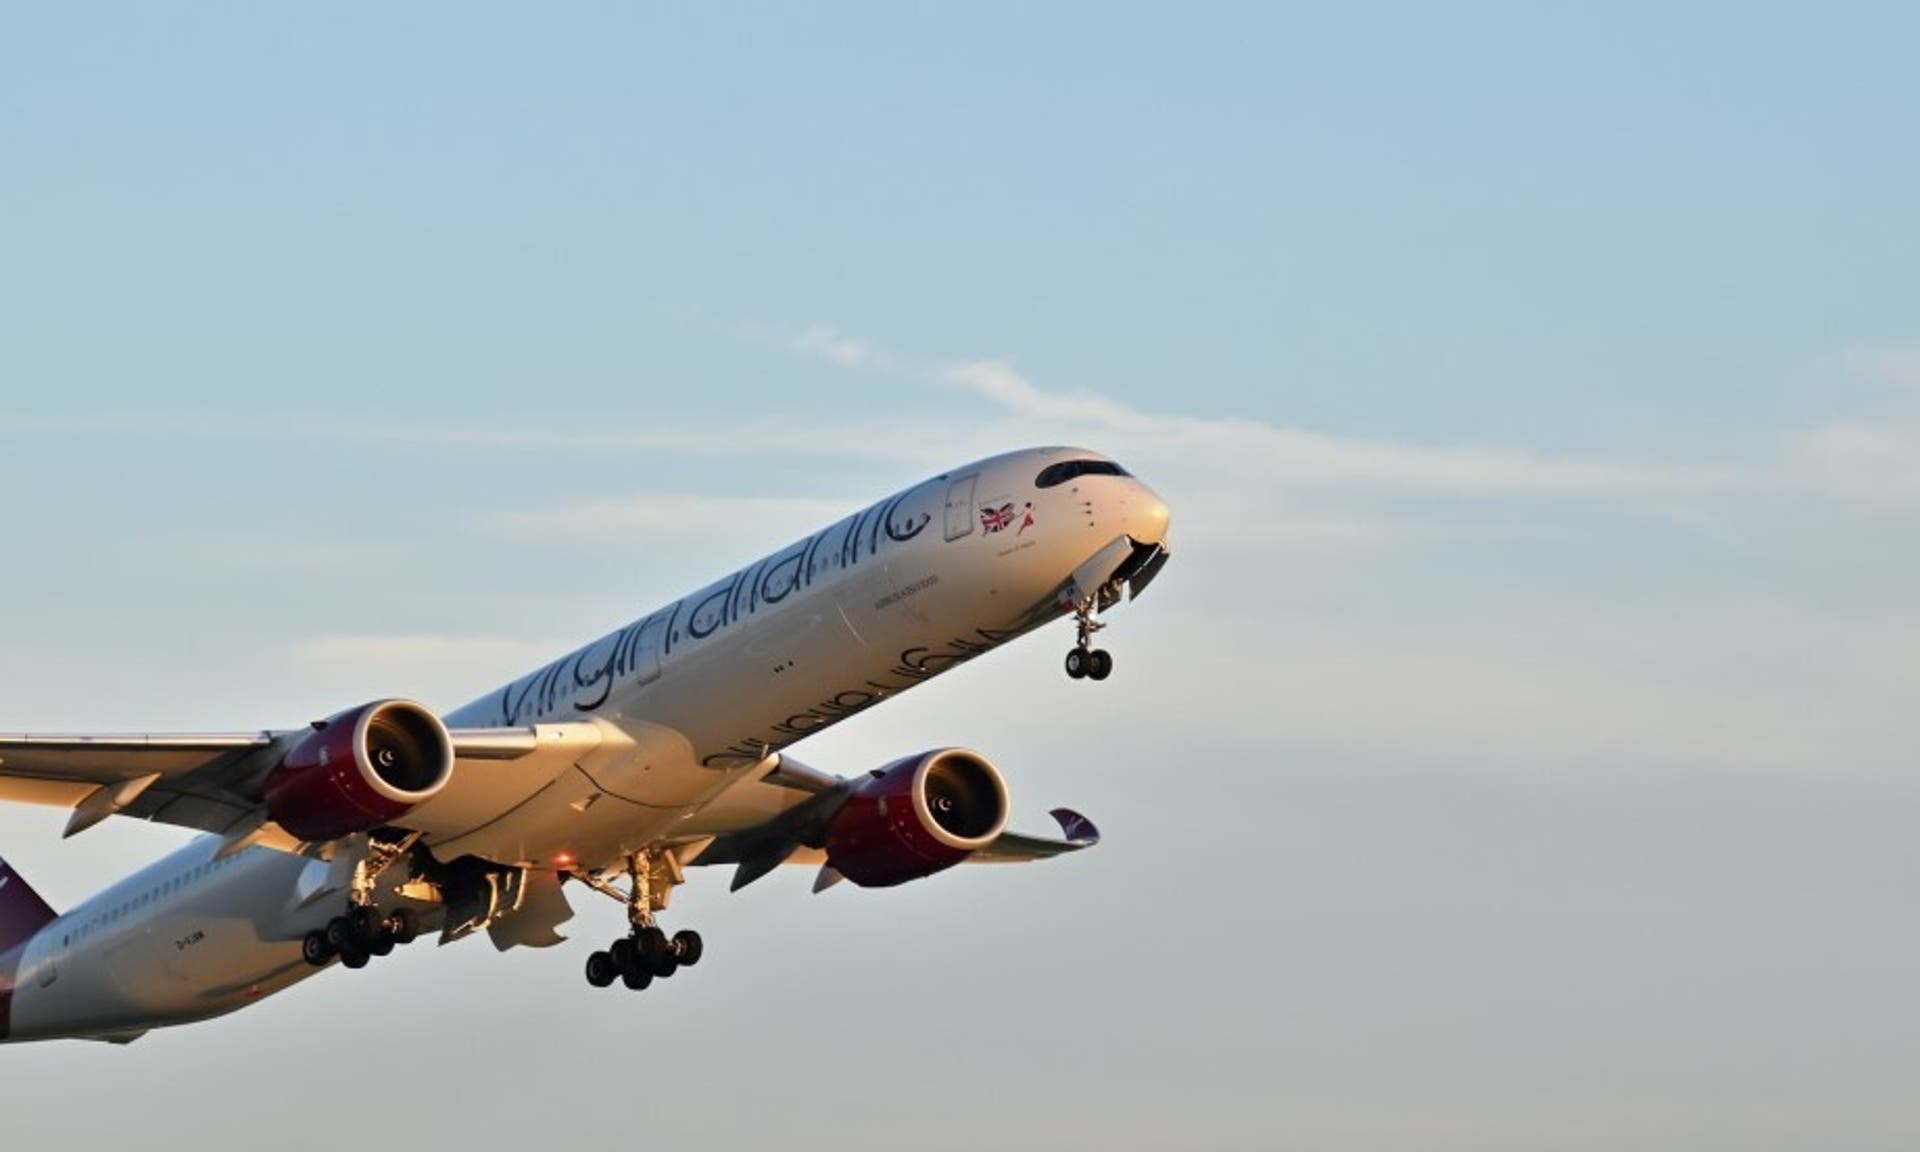  a Virgin Atlantic plane taking off 